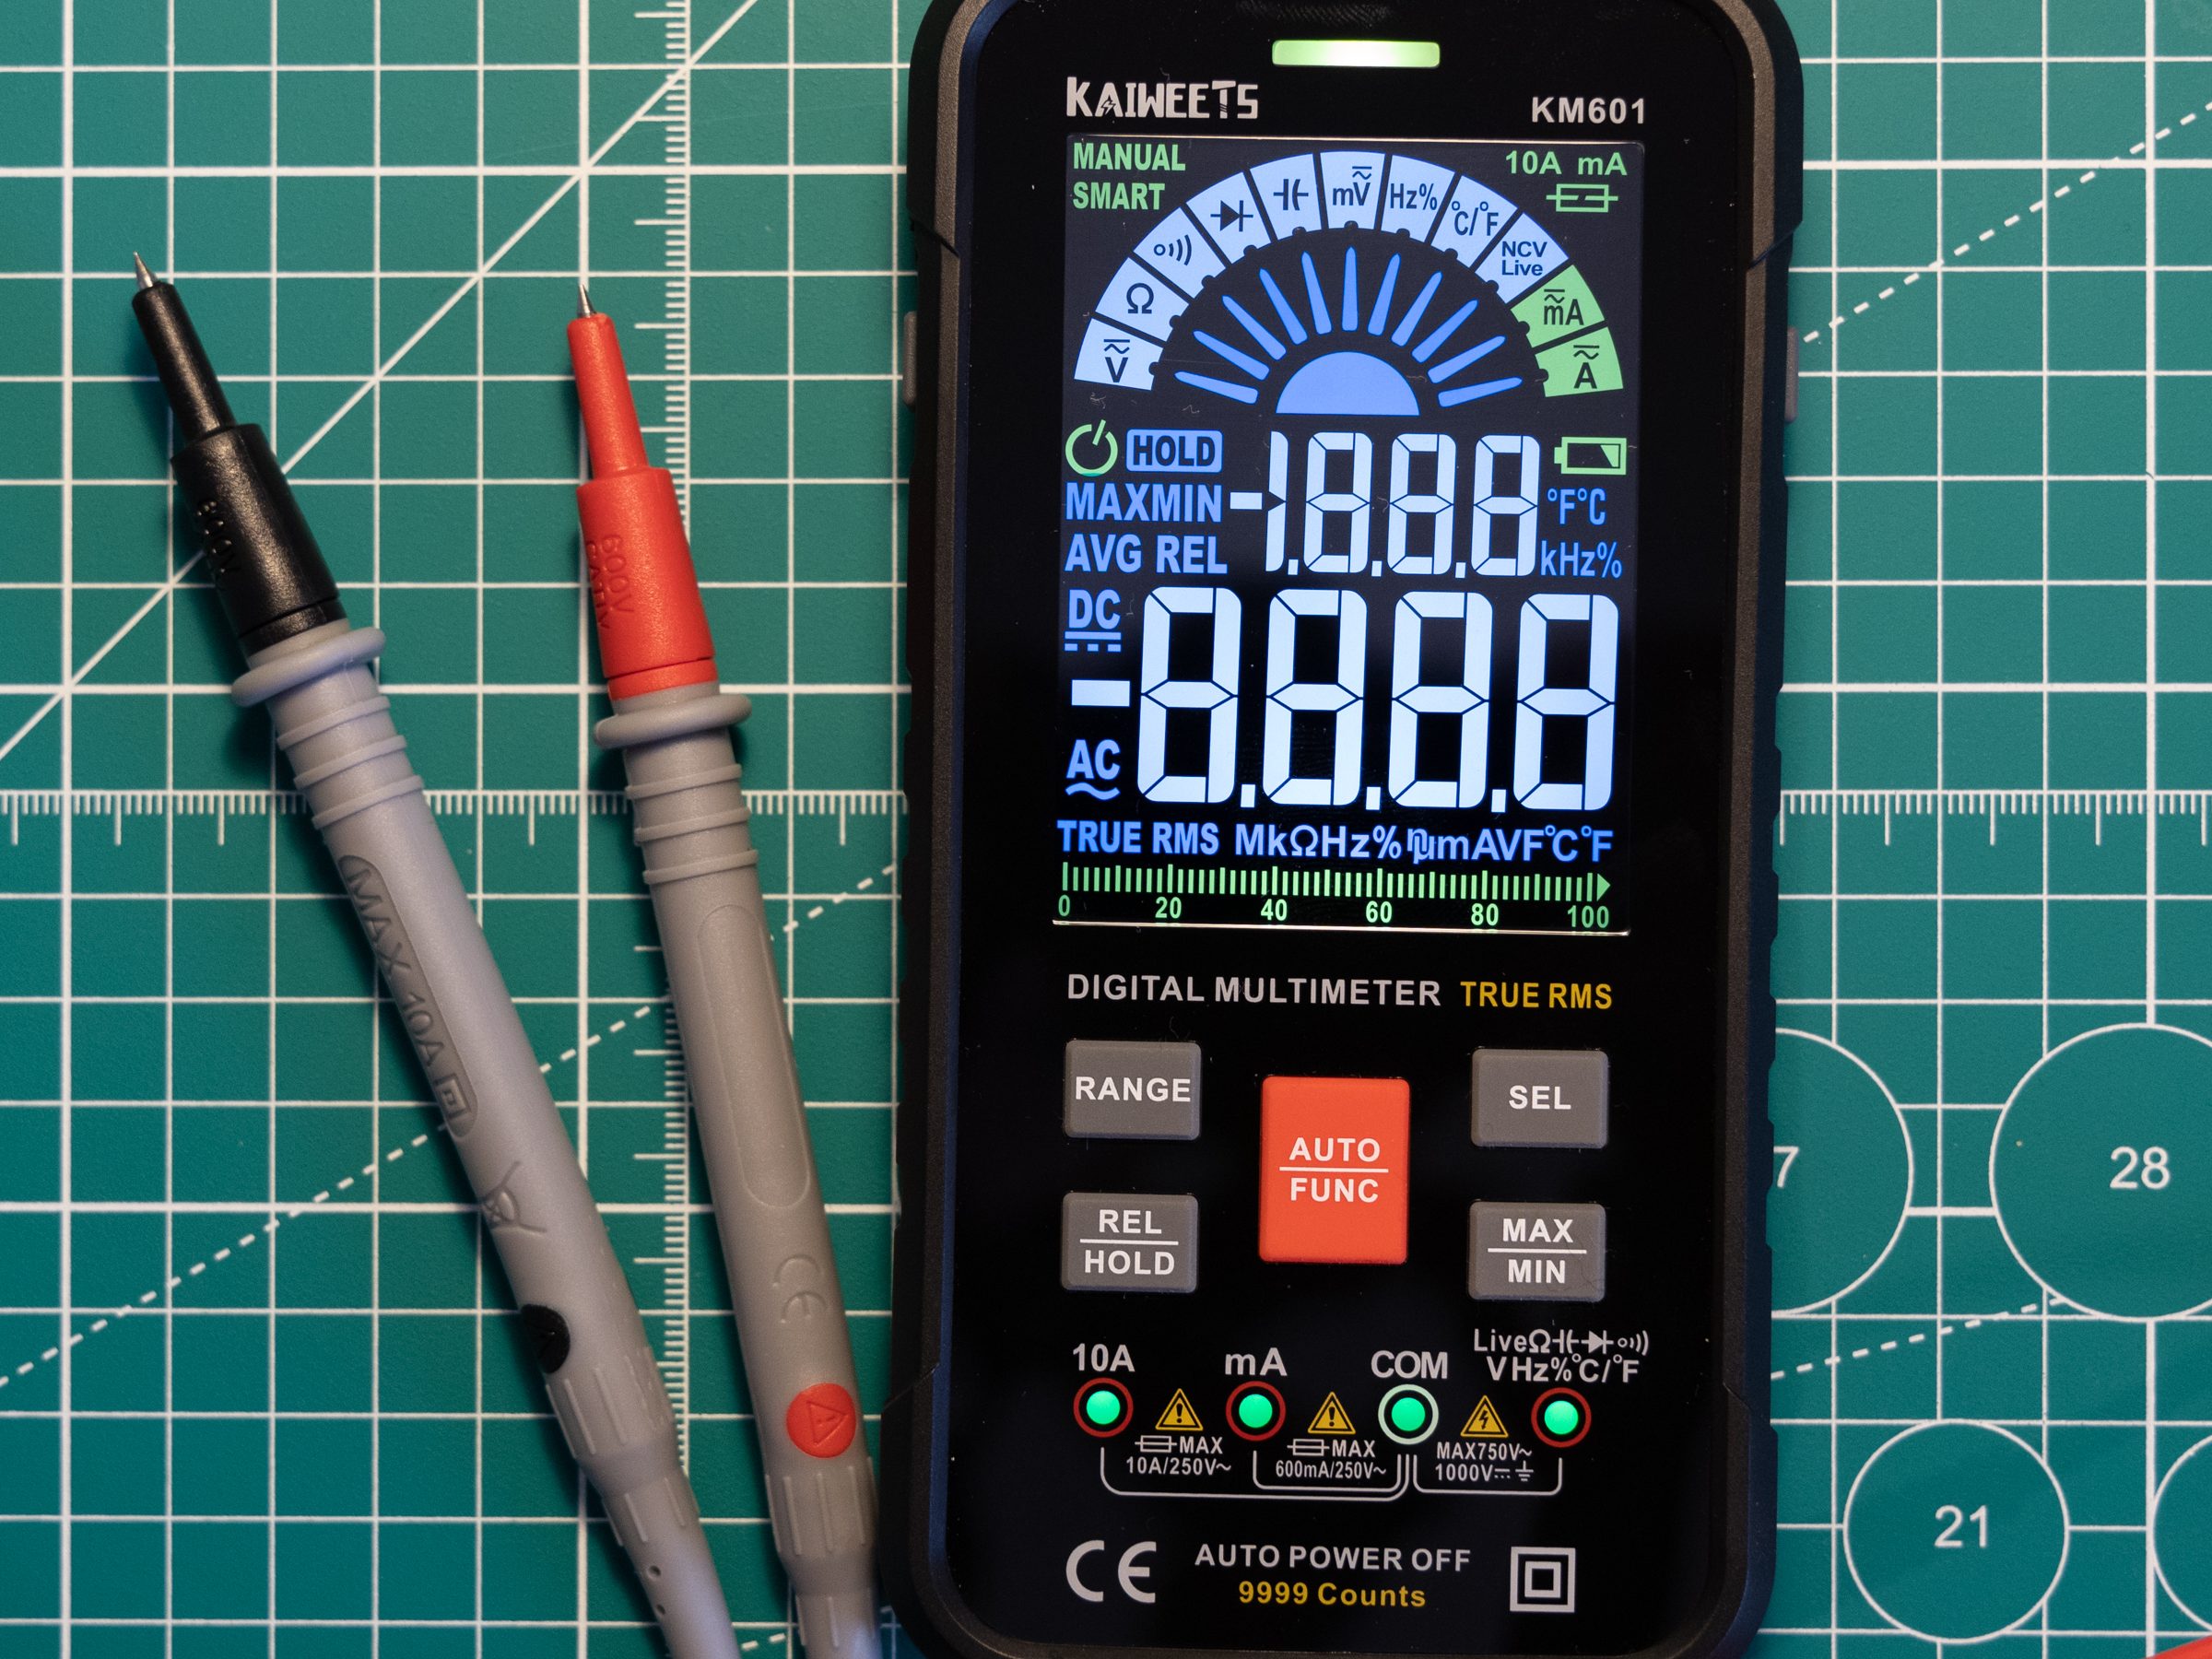 Kaiweets KM601 Digital Multimeter Review